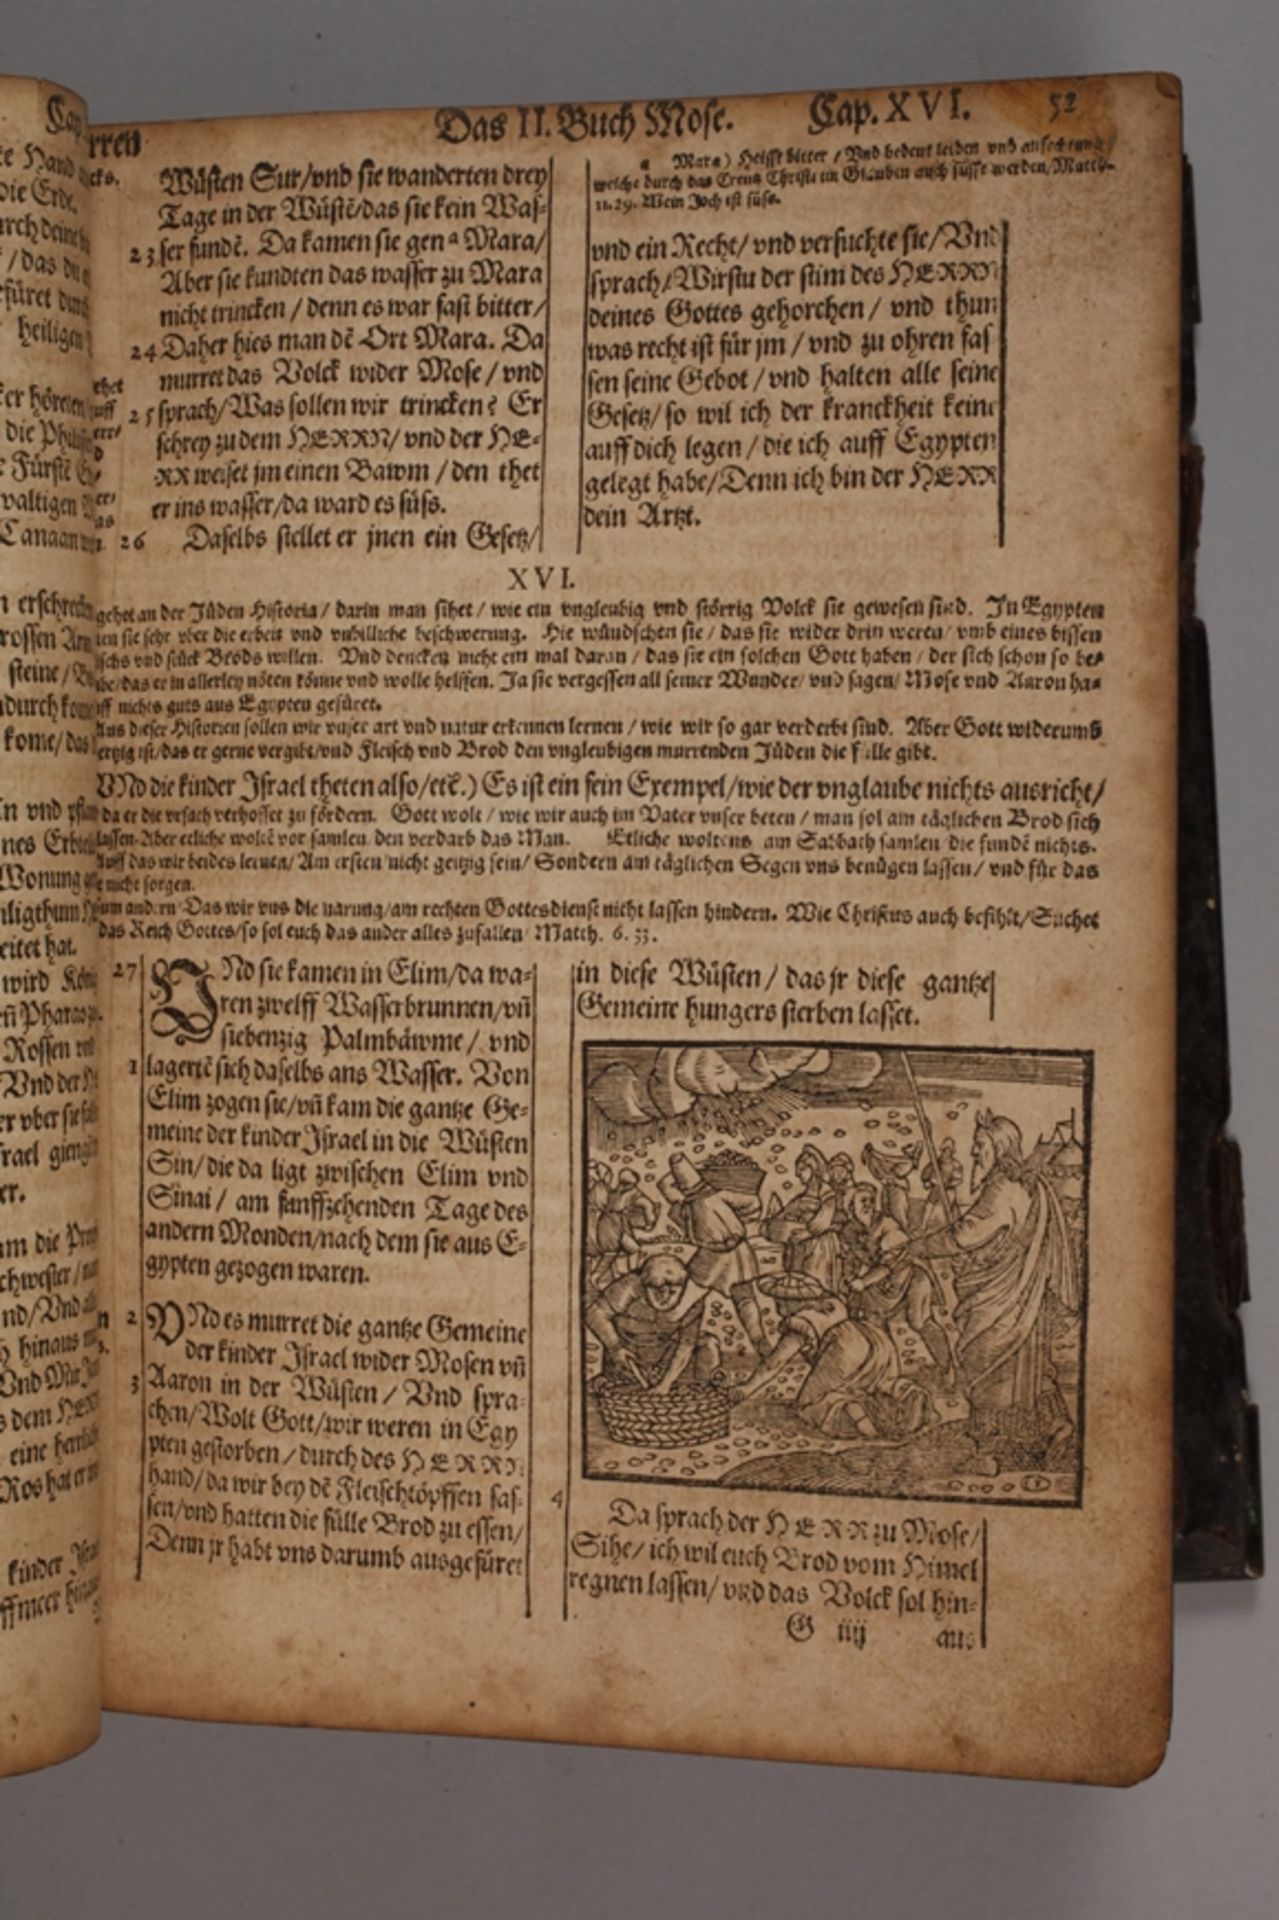 Bibel Wittenberg 1589 - Image 7 of 9